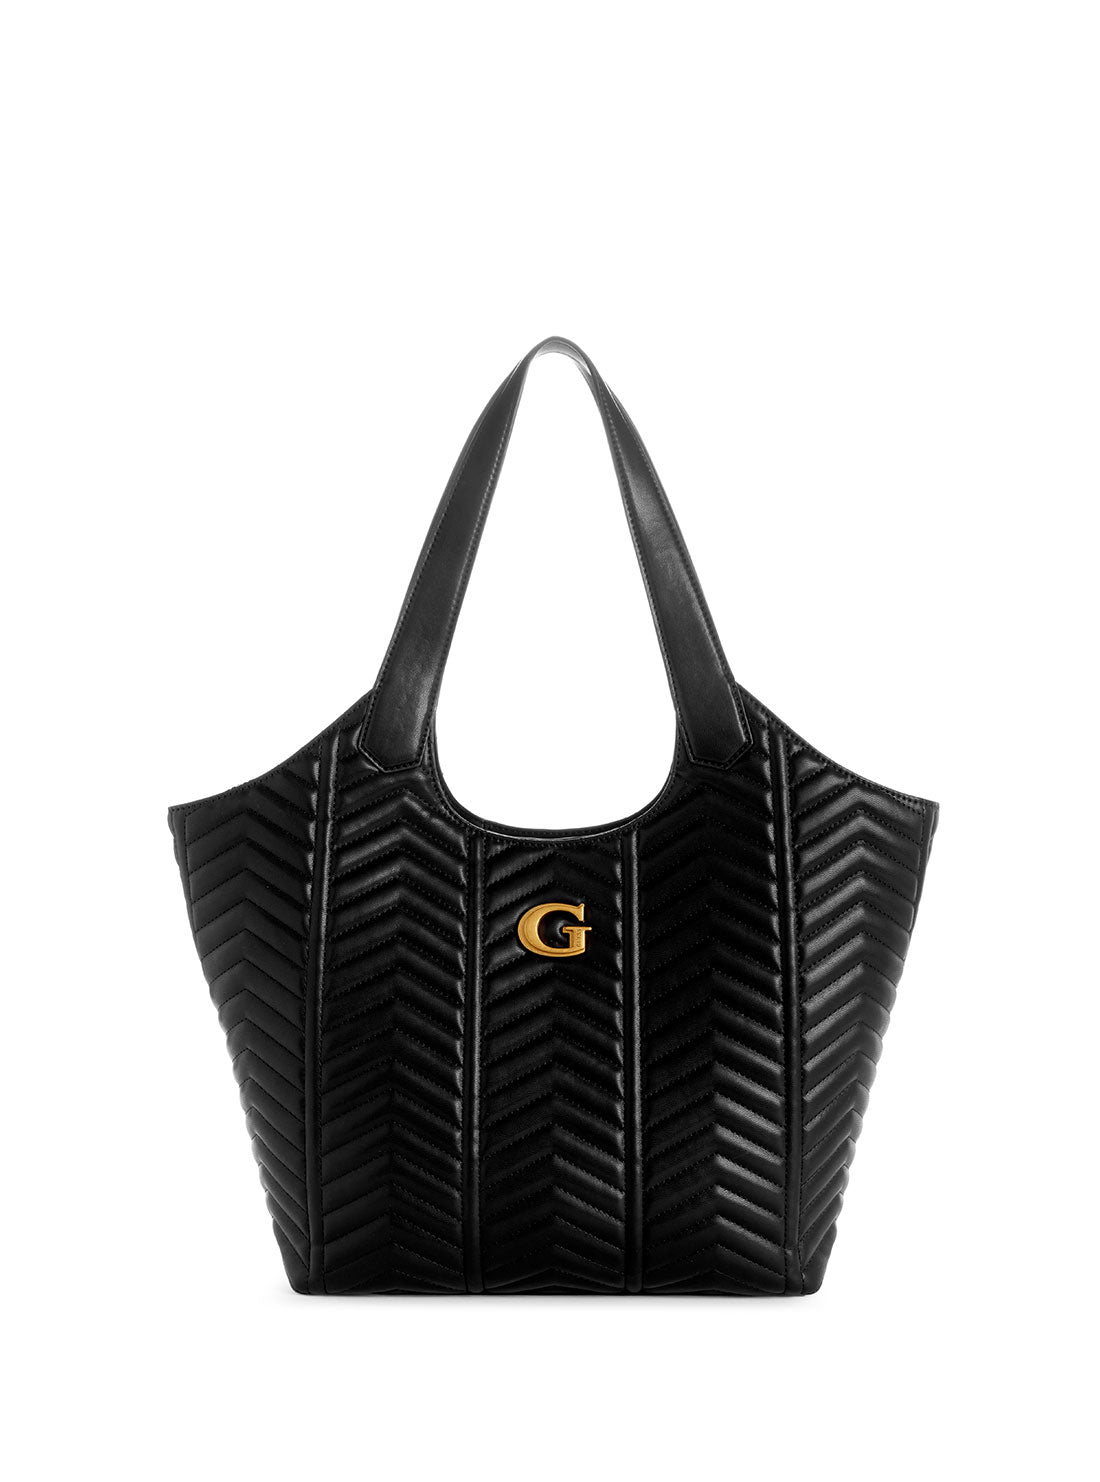 GUESS Women's Black Lovide Tote Bag QB897623 Front View